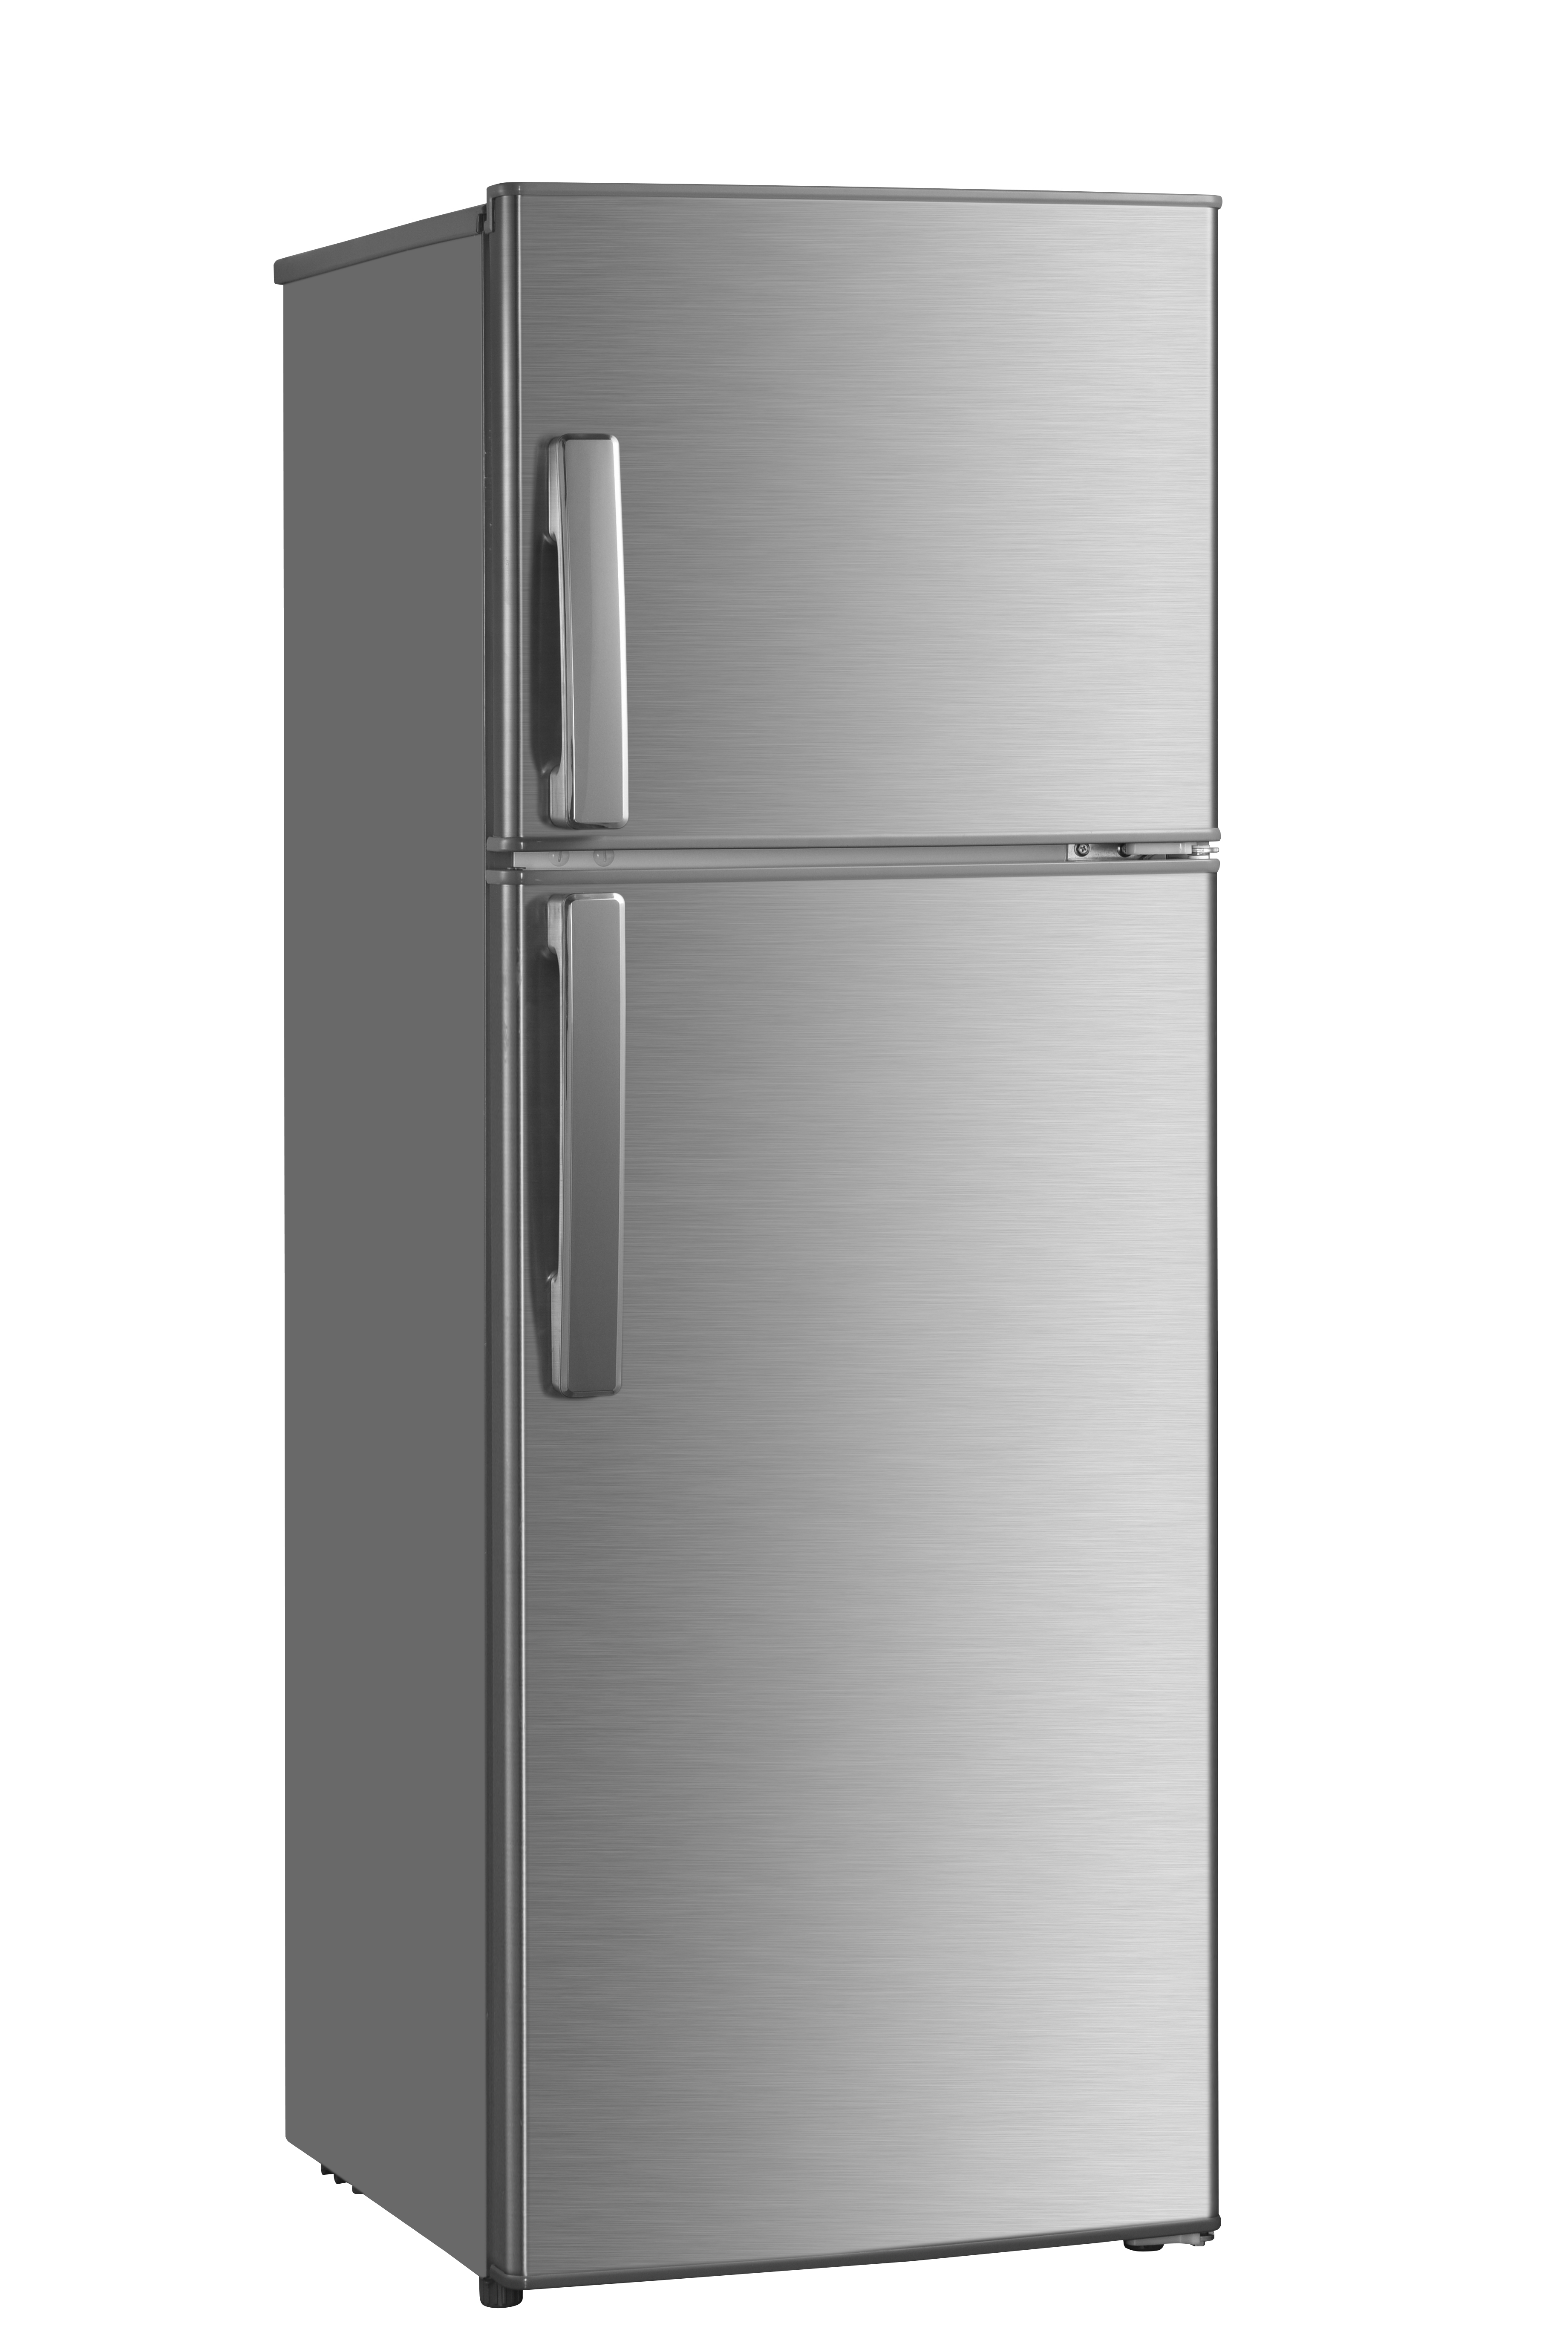 Холодильники 2000 год. Sharp холодильник Refrigerator Freezer. Холодильник Sharp SJ-pt521r-HS. Sharp 430 холодильник. Холодильник 170 Шарп.